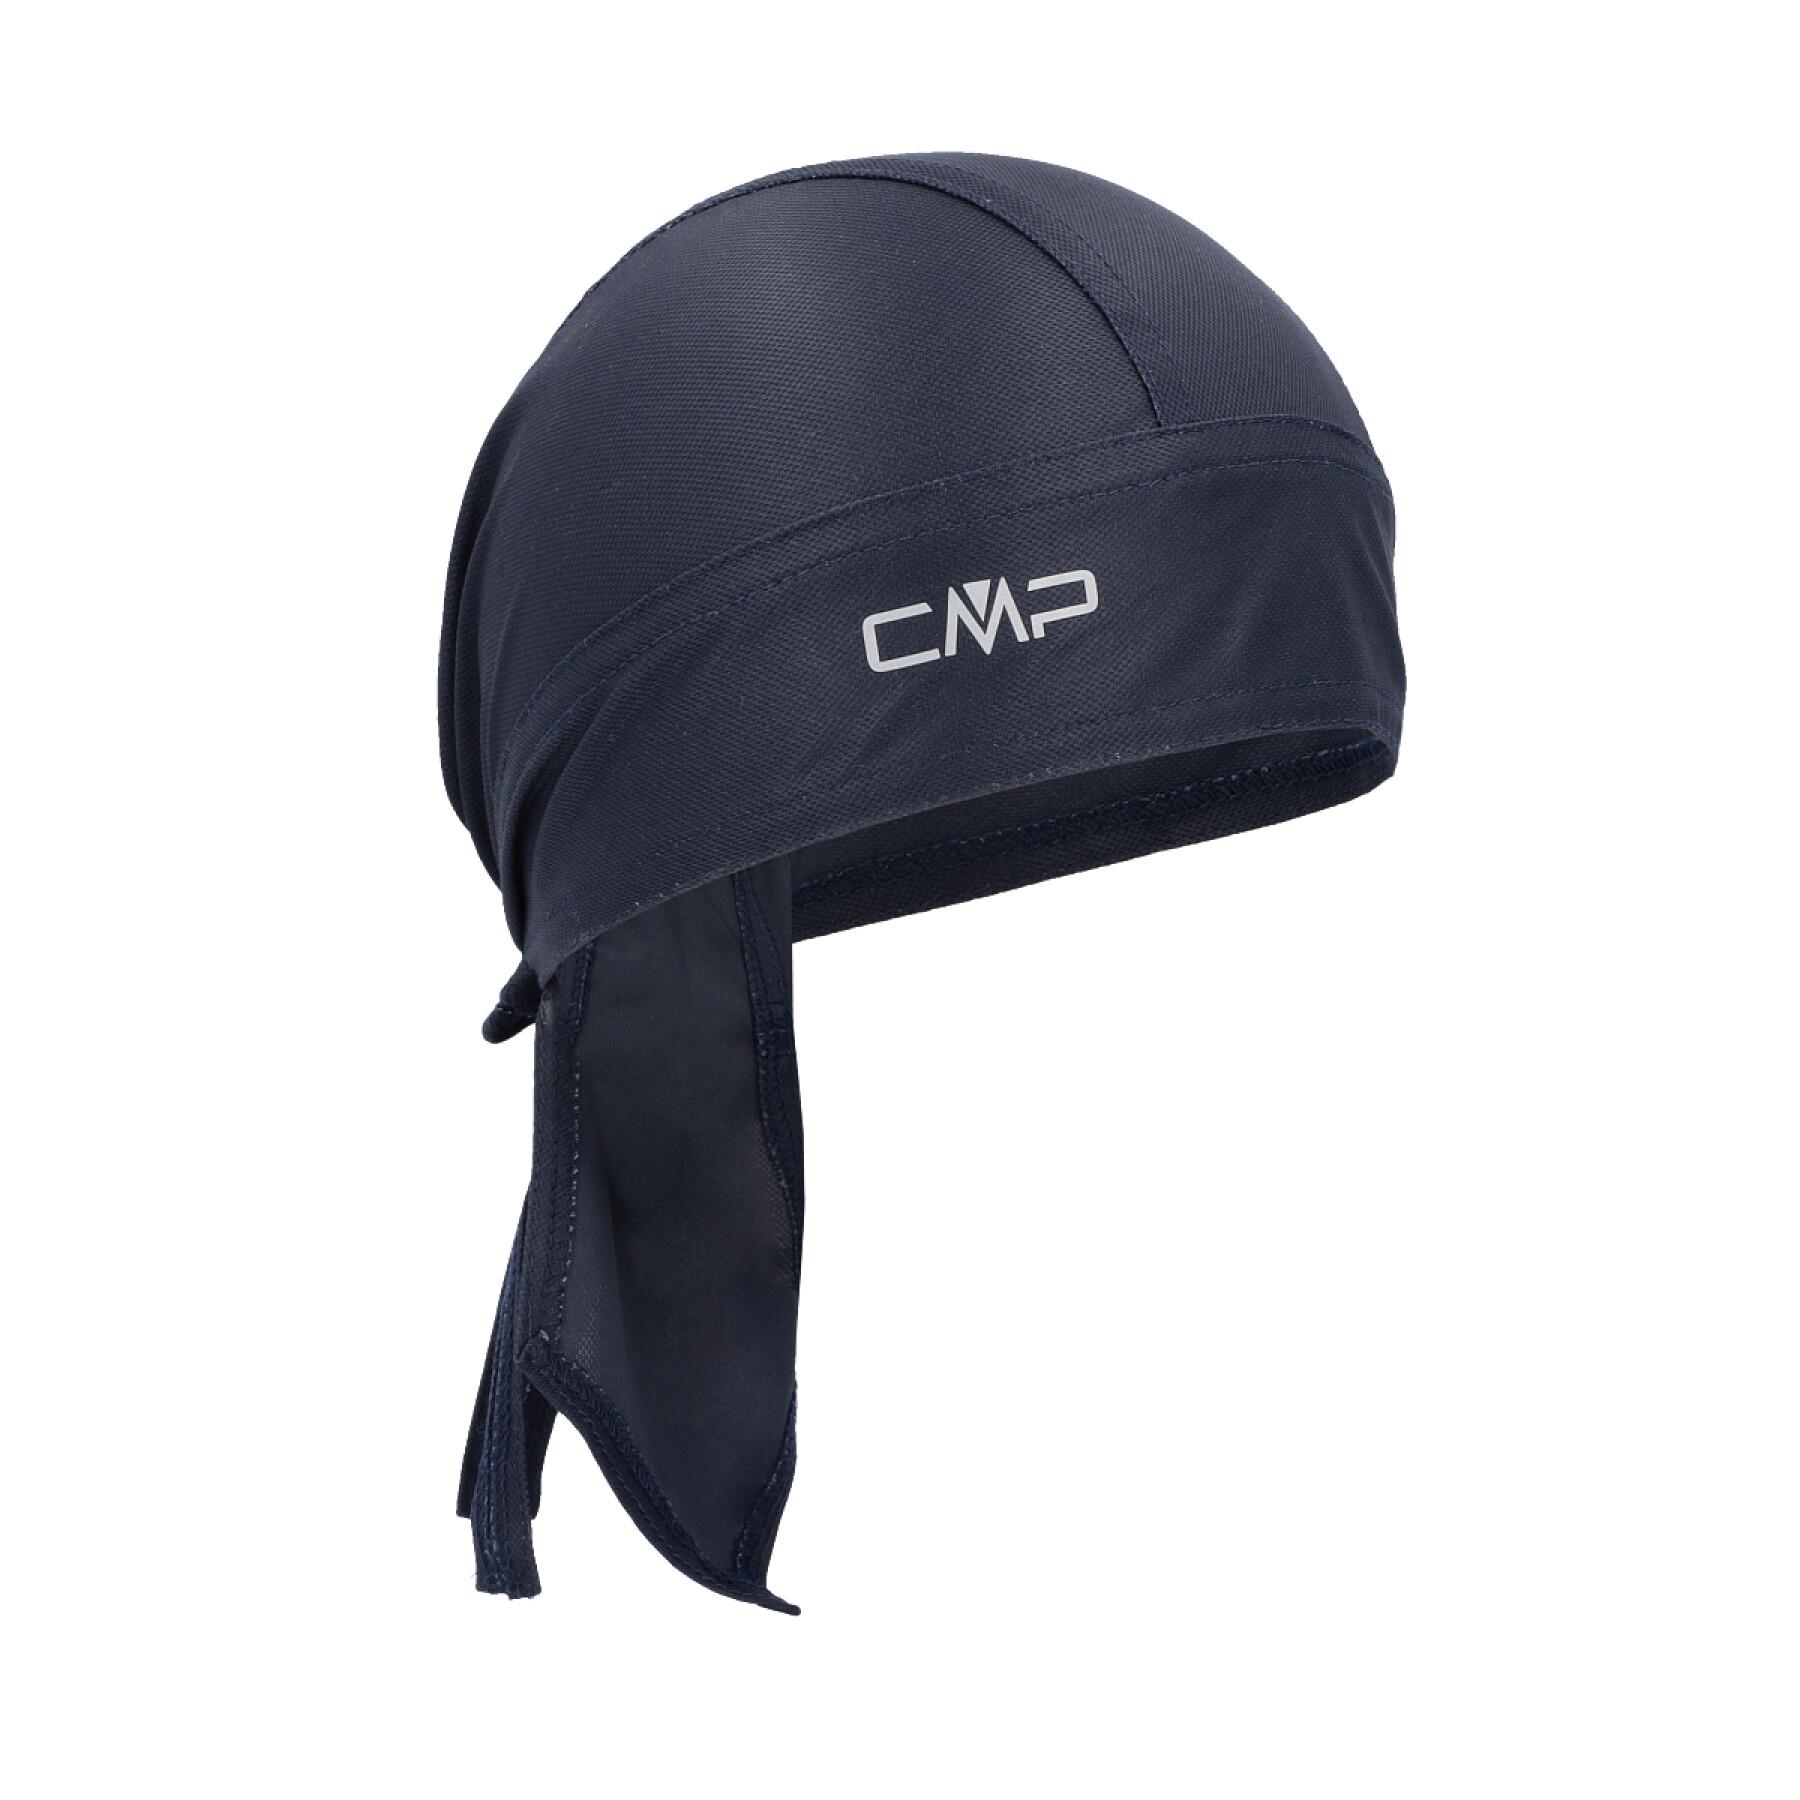 Sombrero bandana CMP